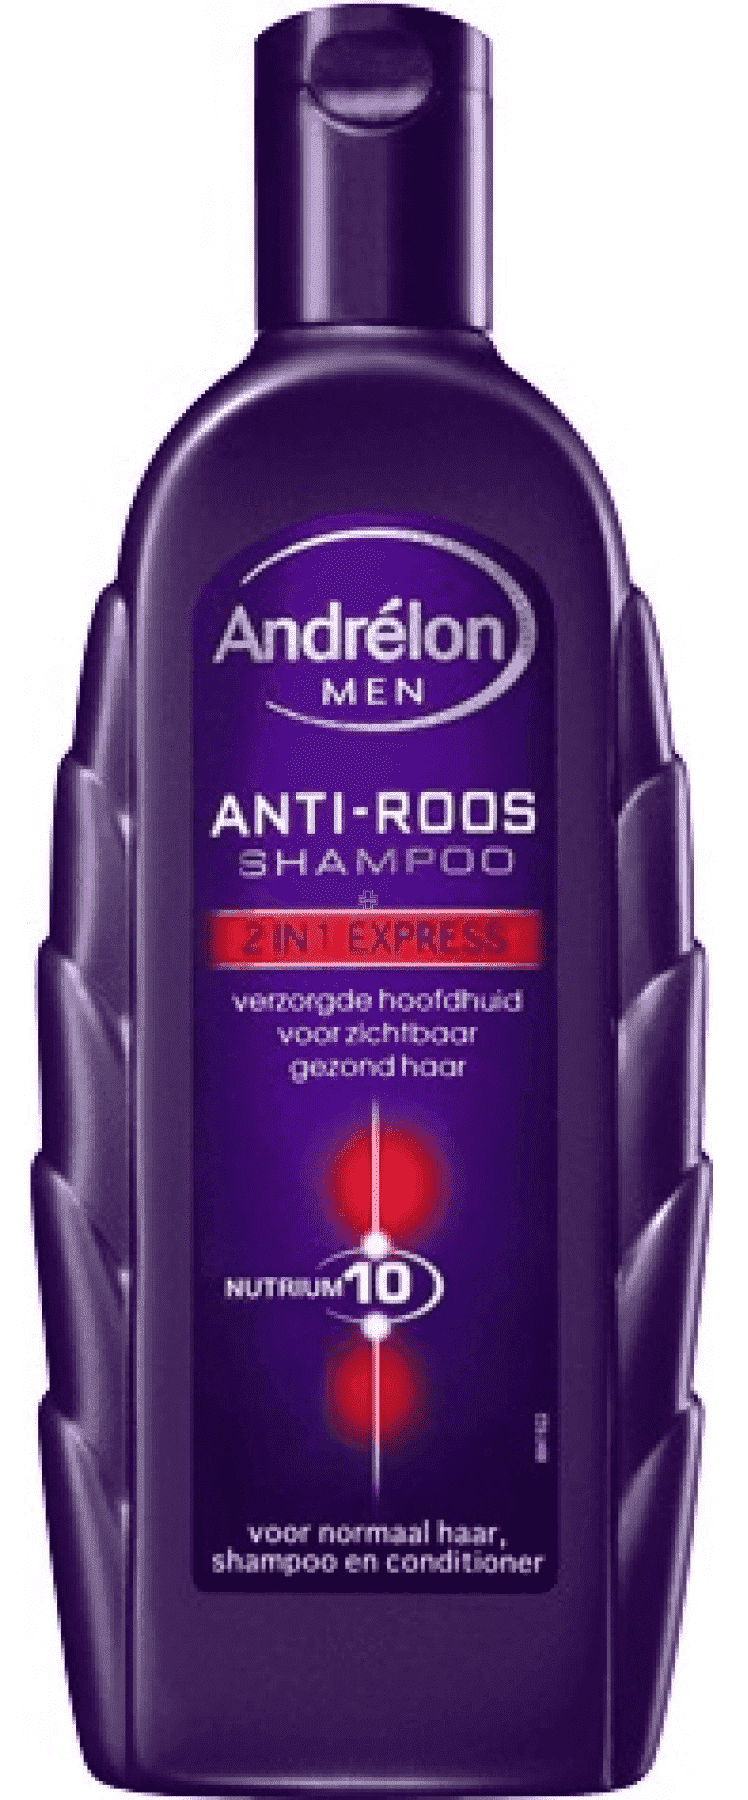 Andrelon Shampoo Men - Anti-Roos 2 in 1 Express 300 ml.